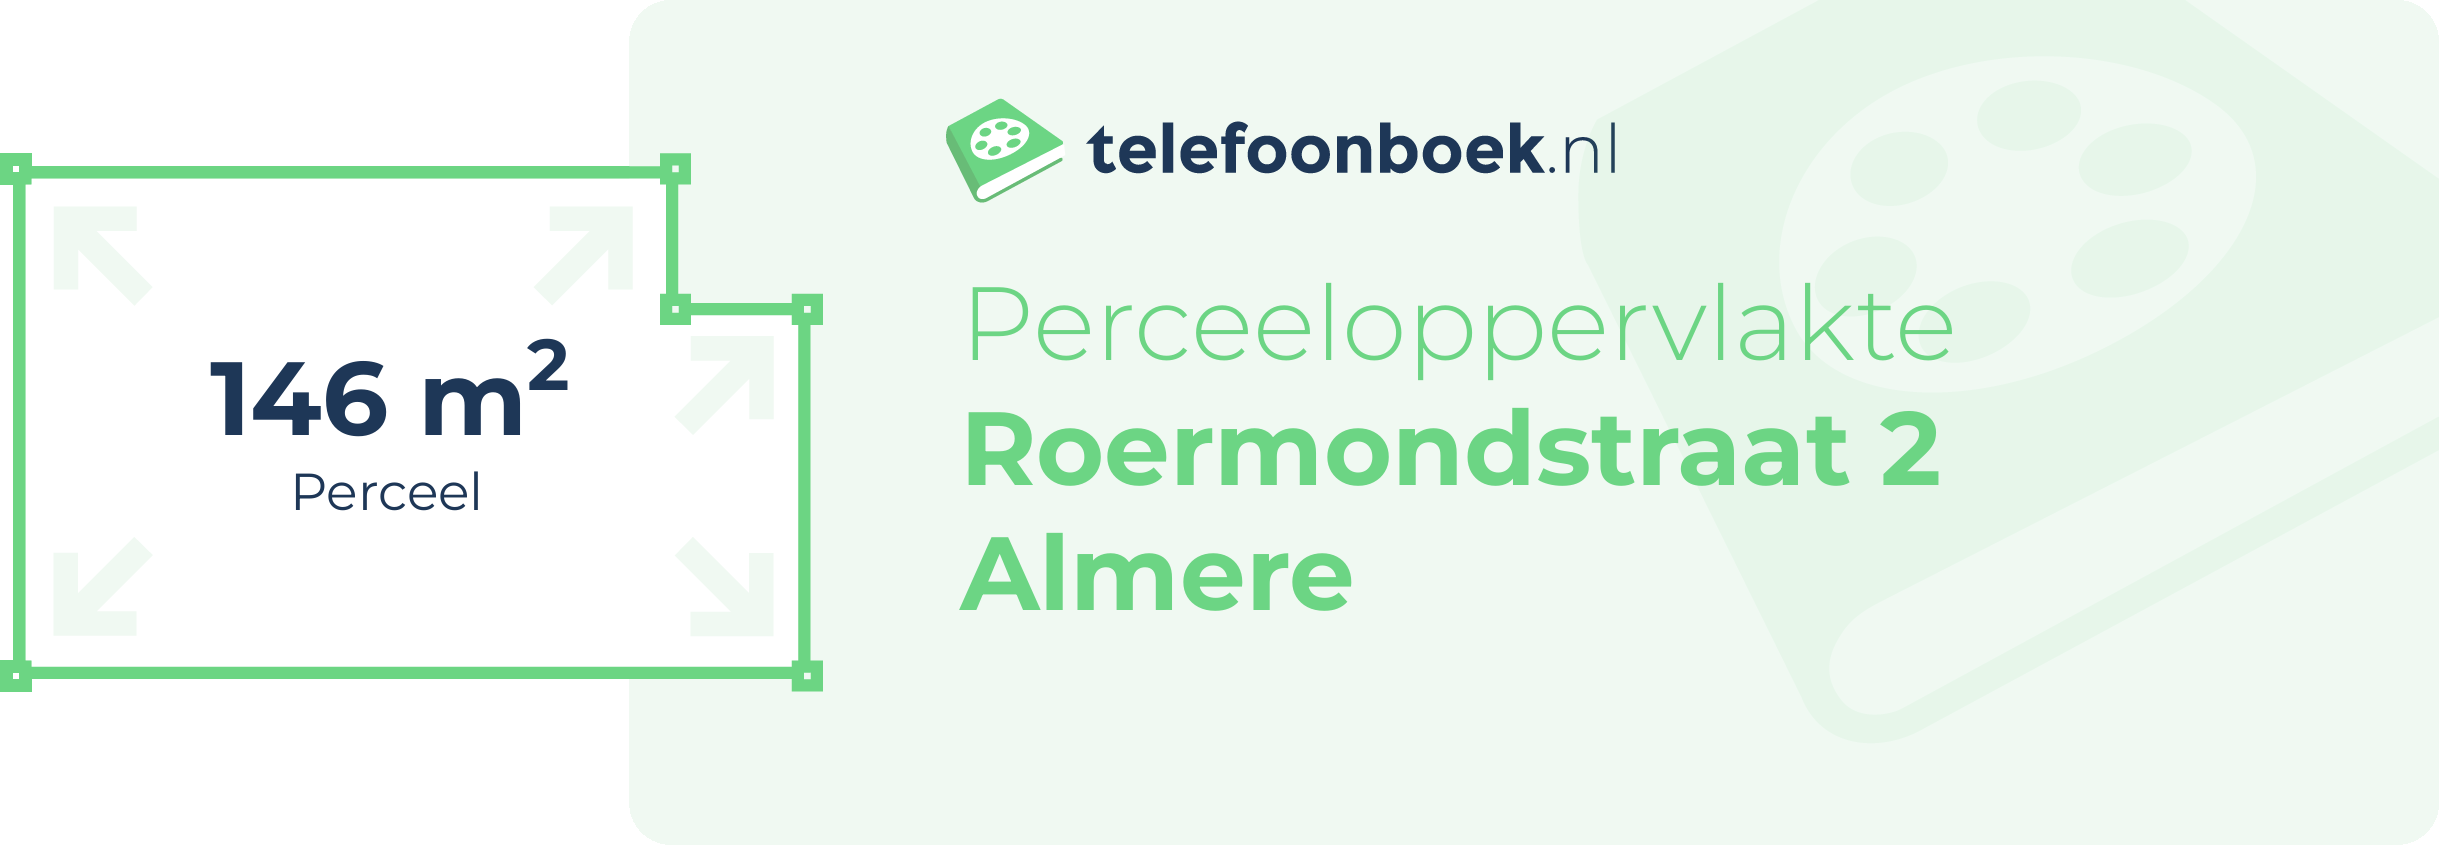 Perceeloppervlakte Roermondstraat 2 Almere